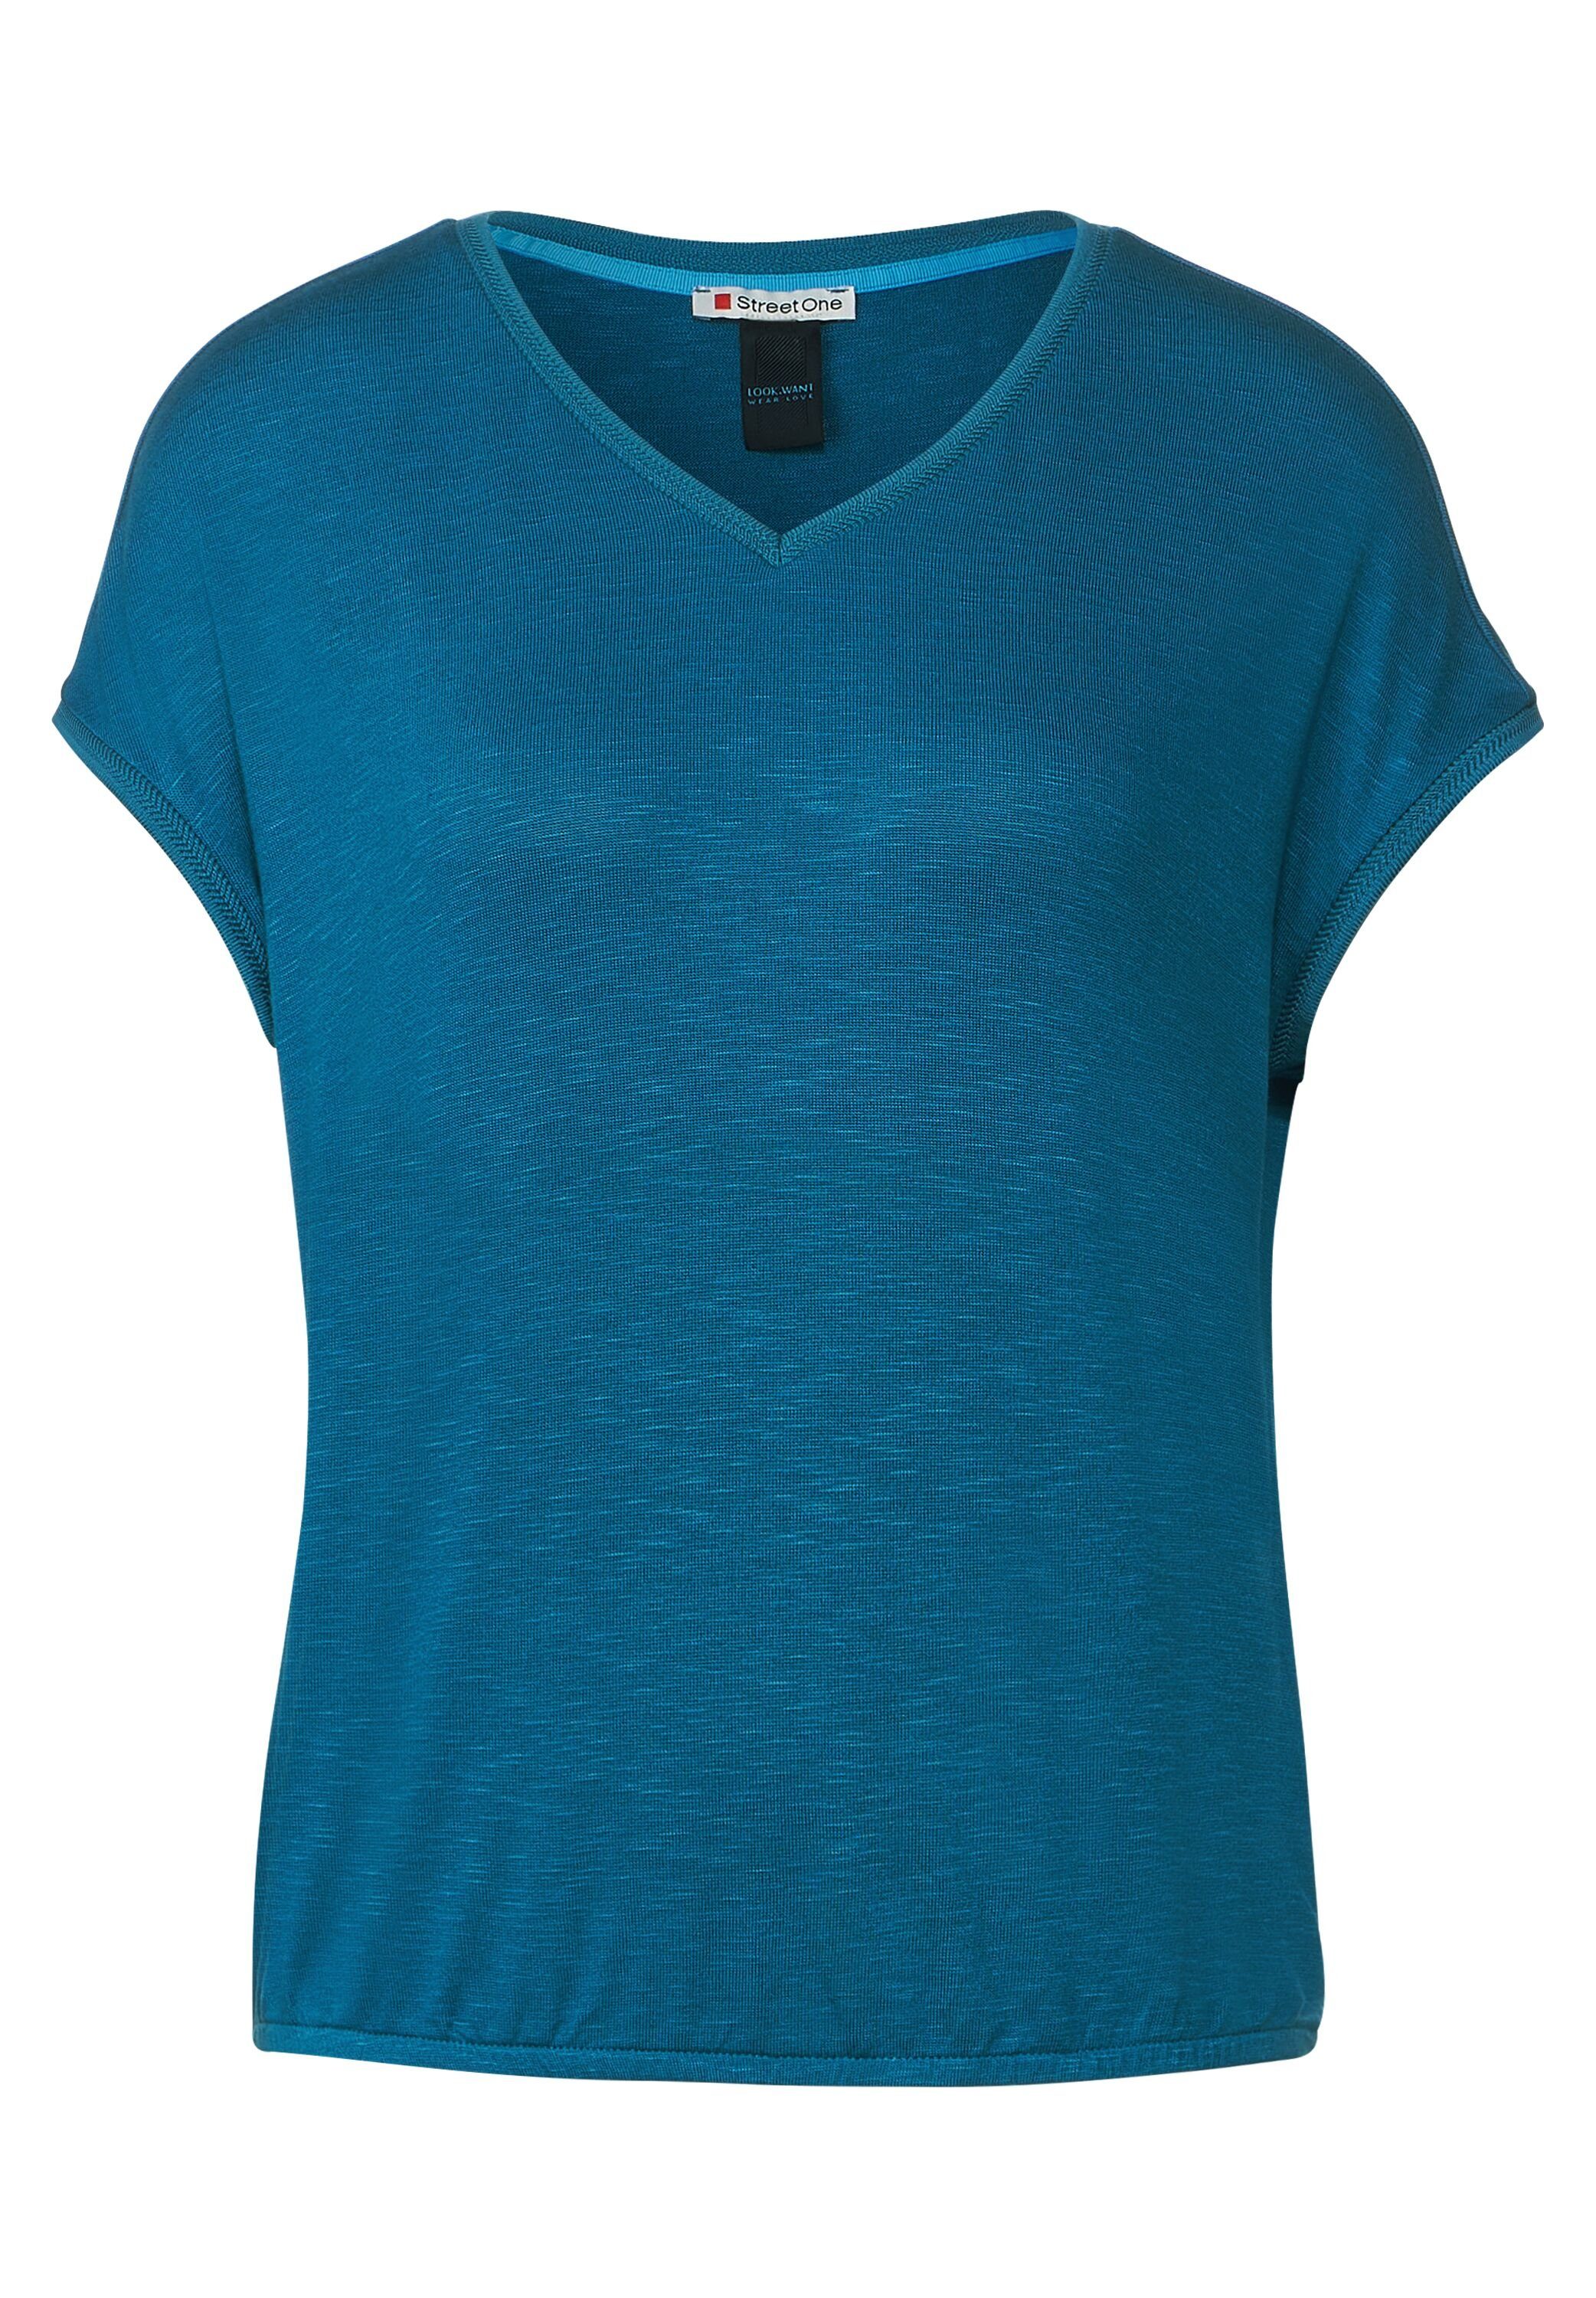 ONE T-Shirt Unifarbe deep in STREET blue